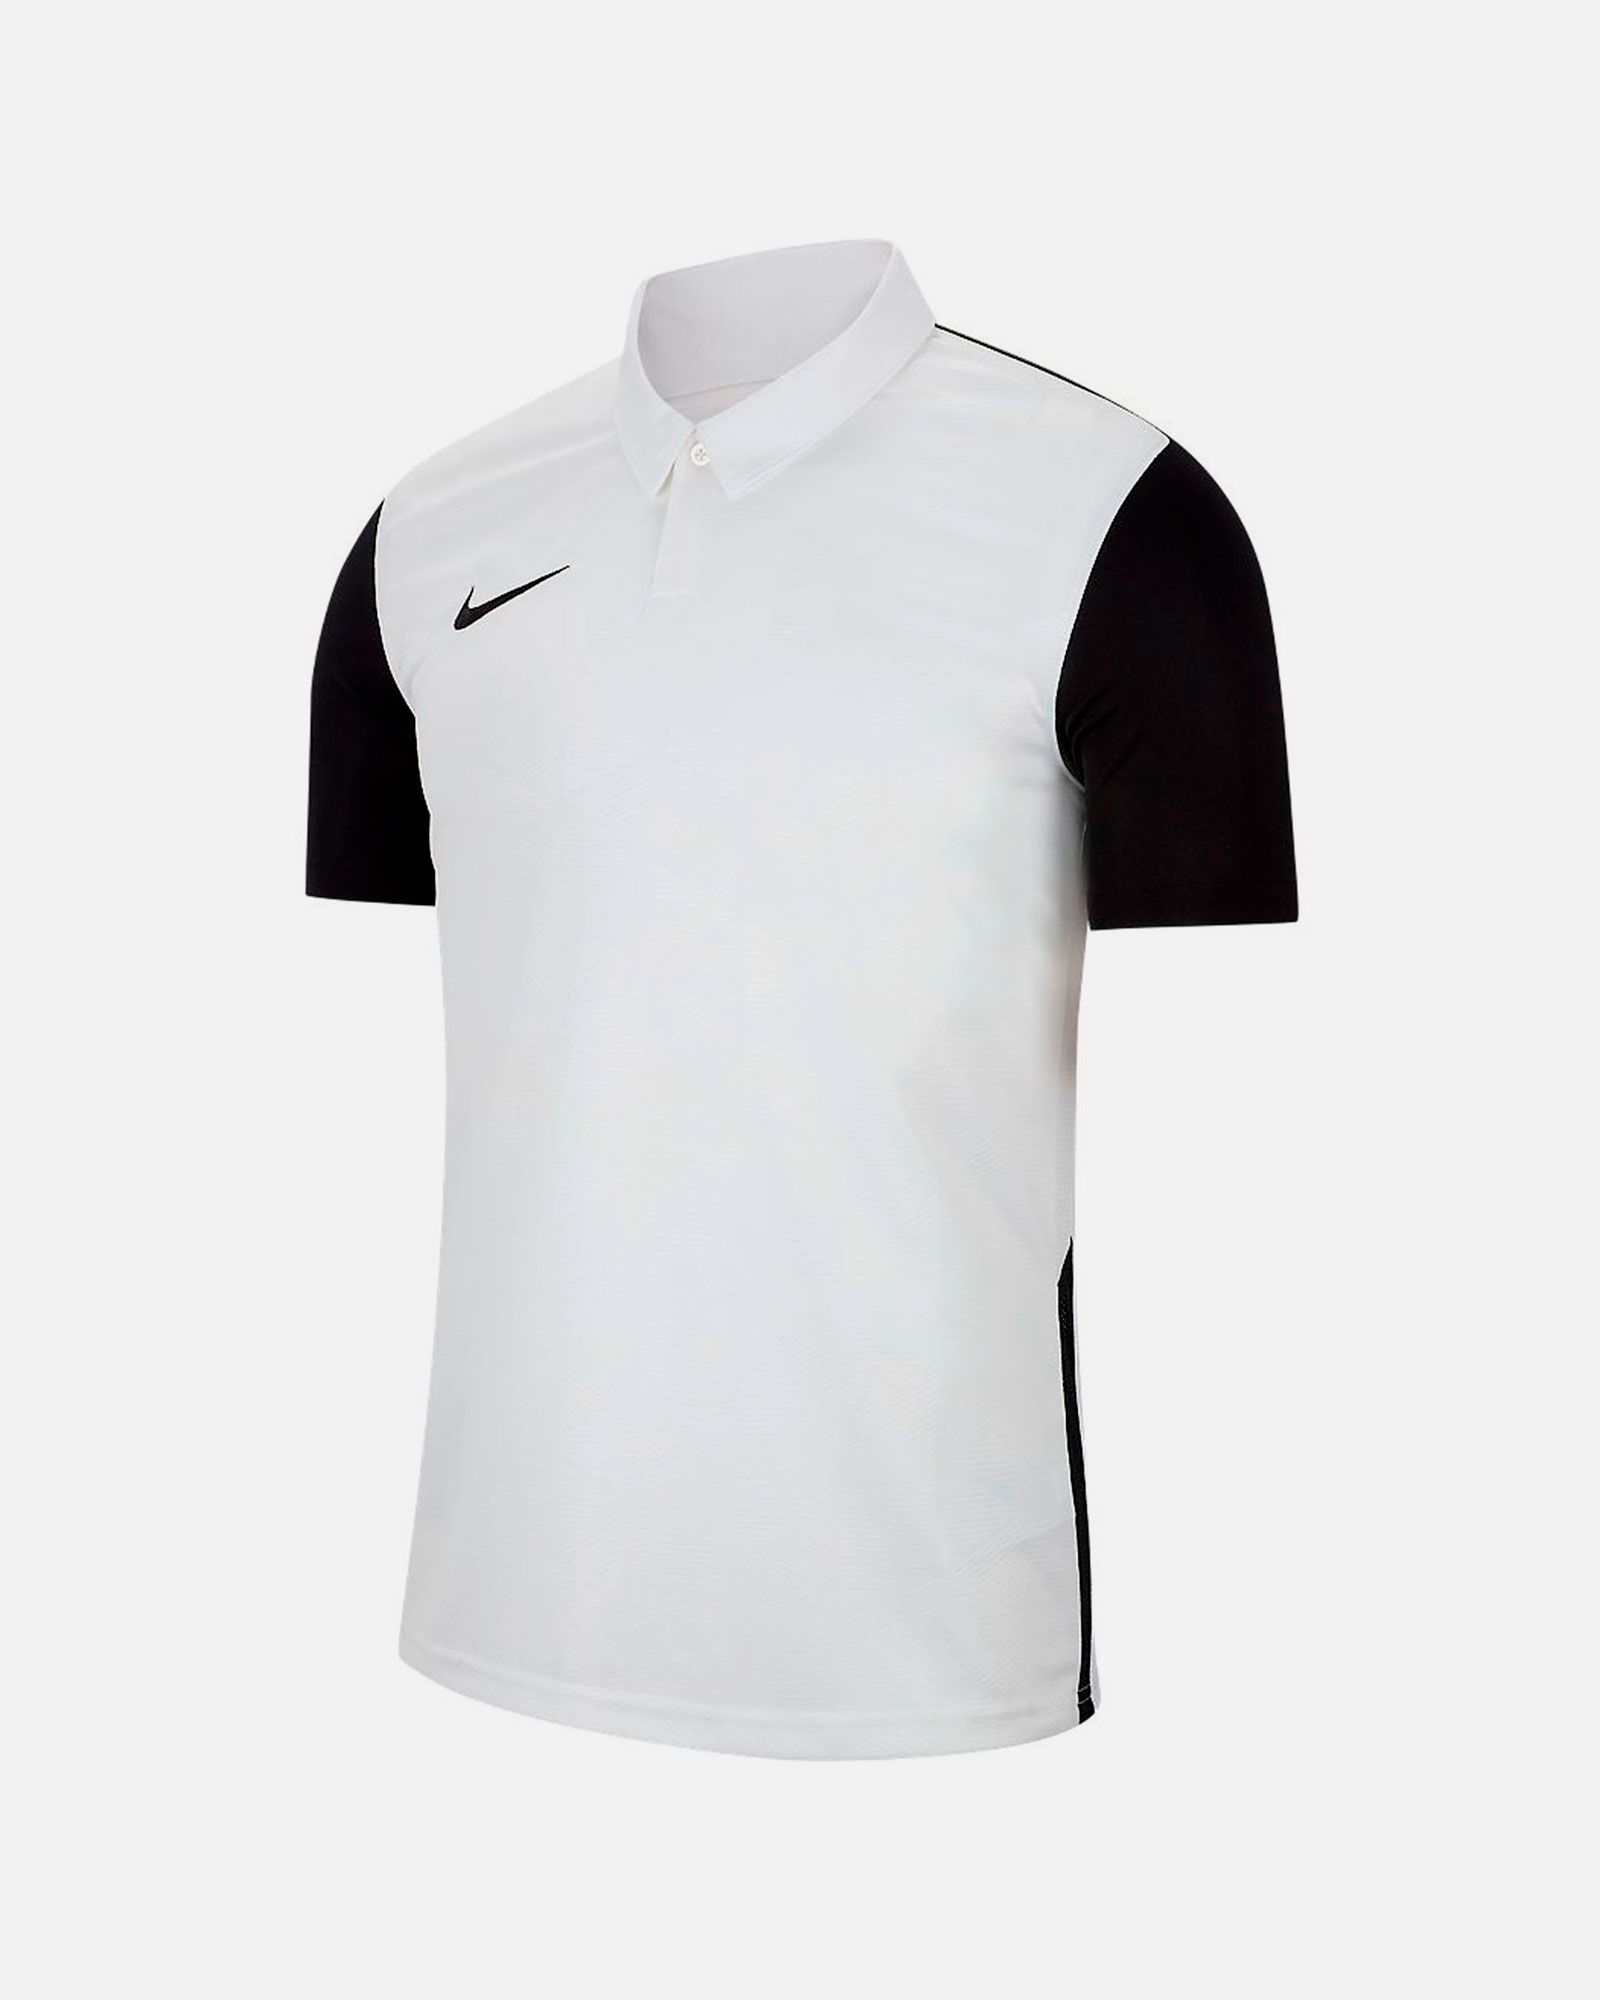 Camiseta Nike Trophy IV - Fútbol Factory